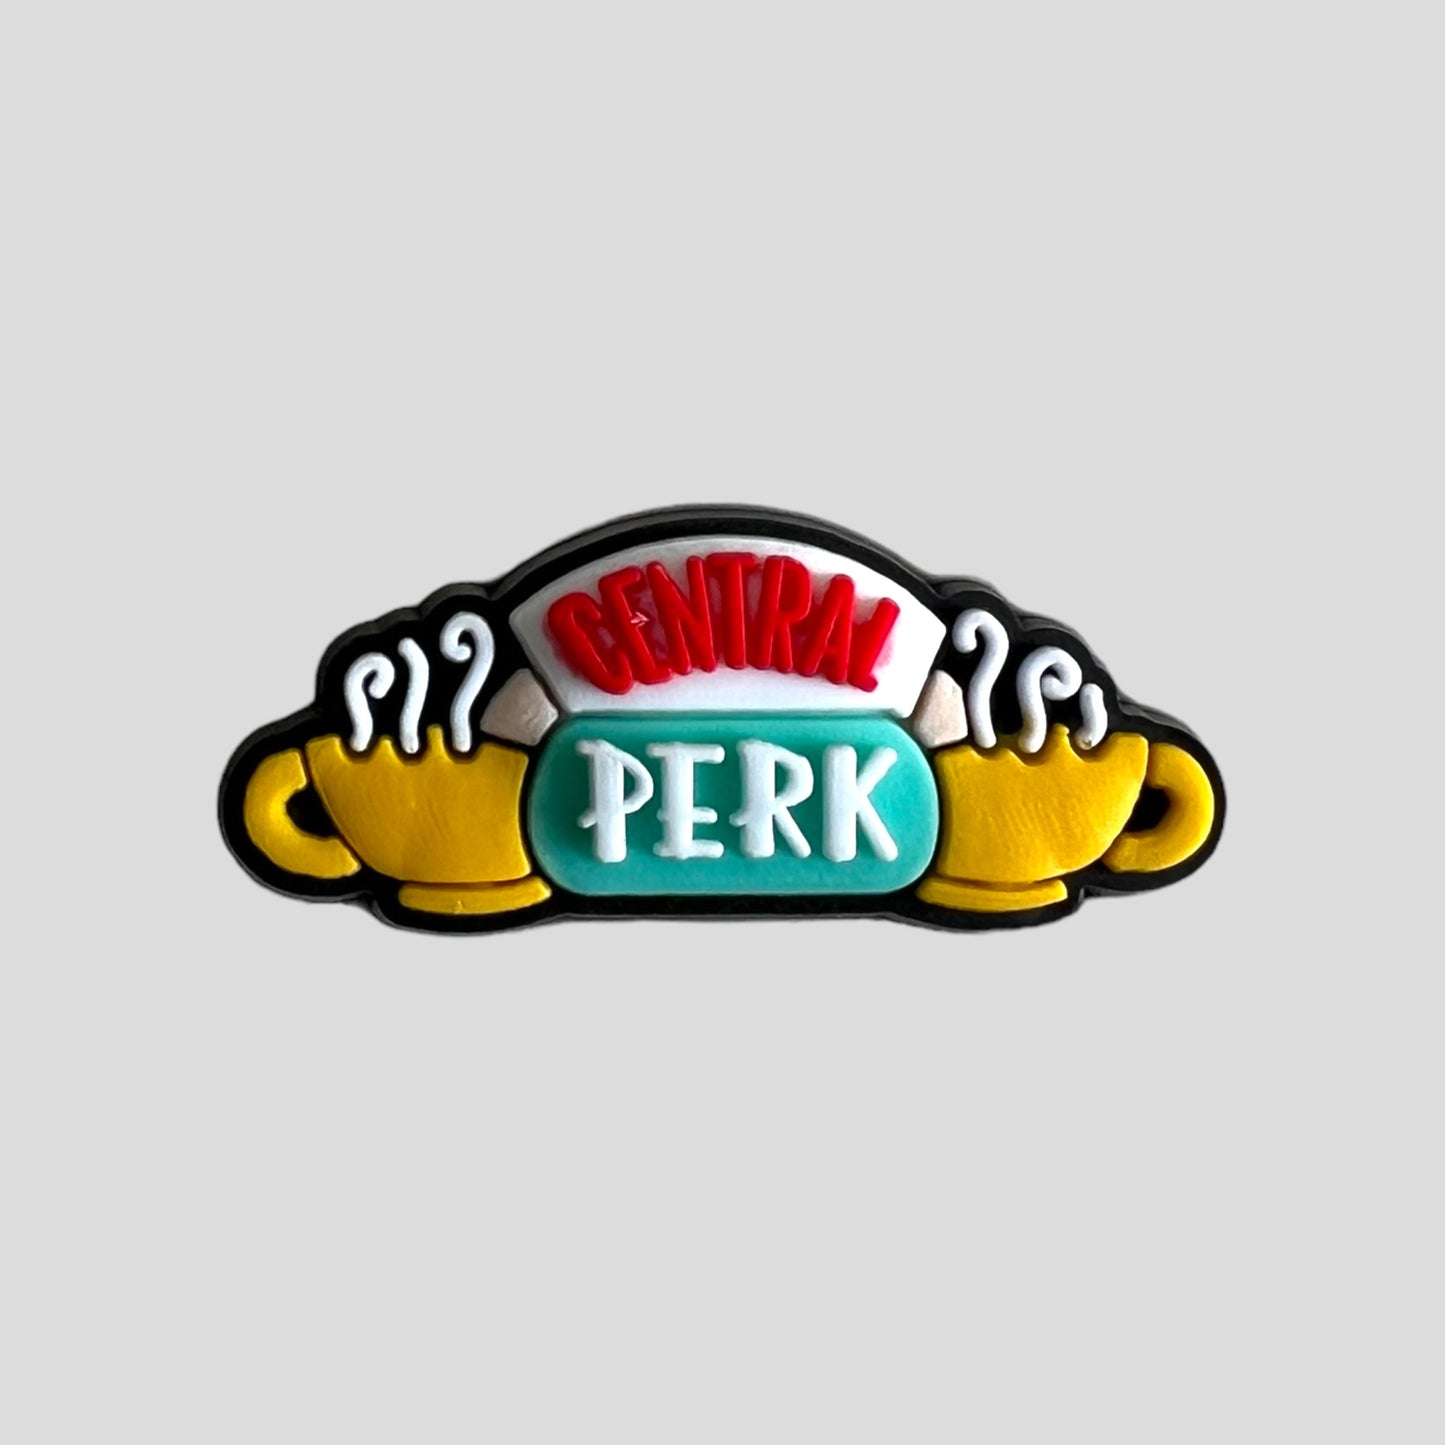 Central Perk | Friends